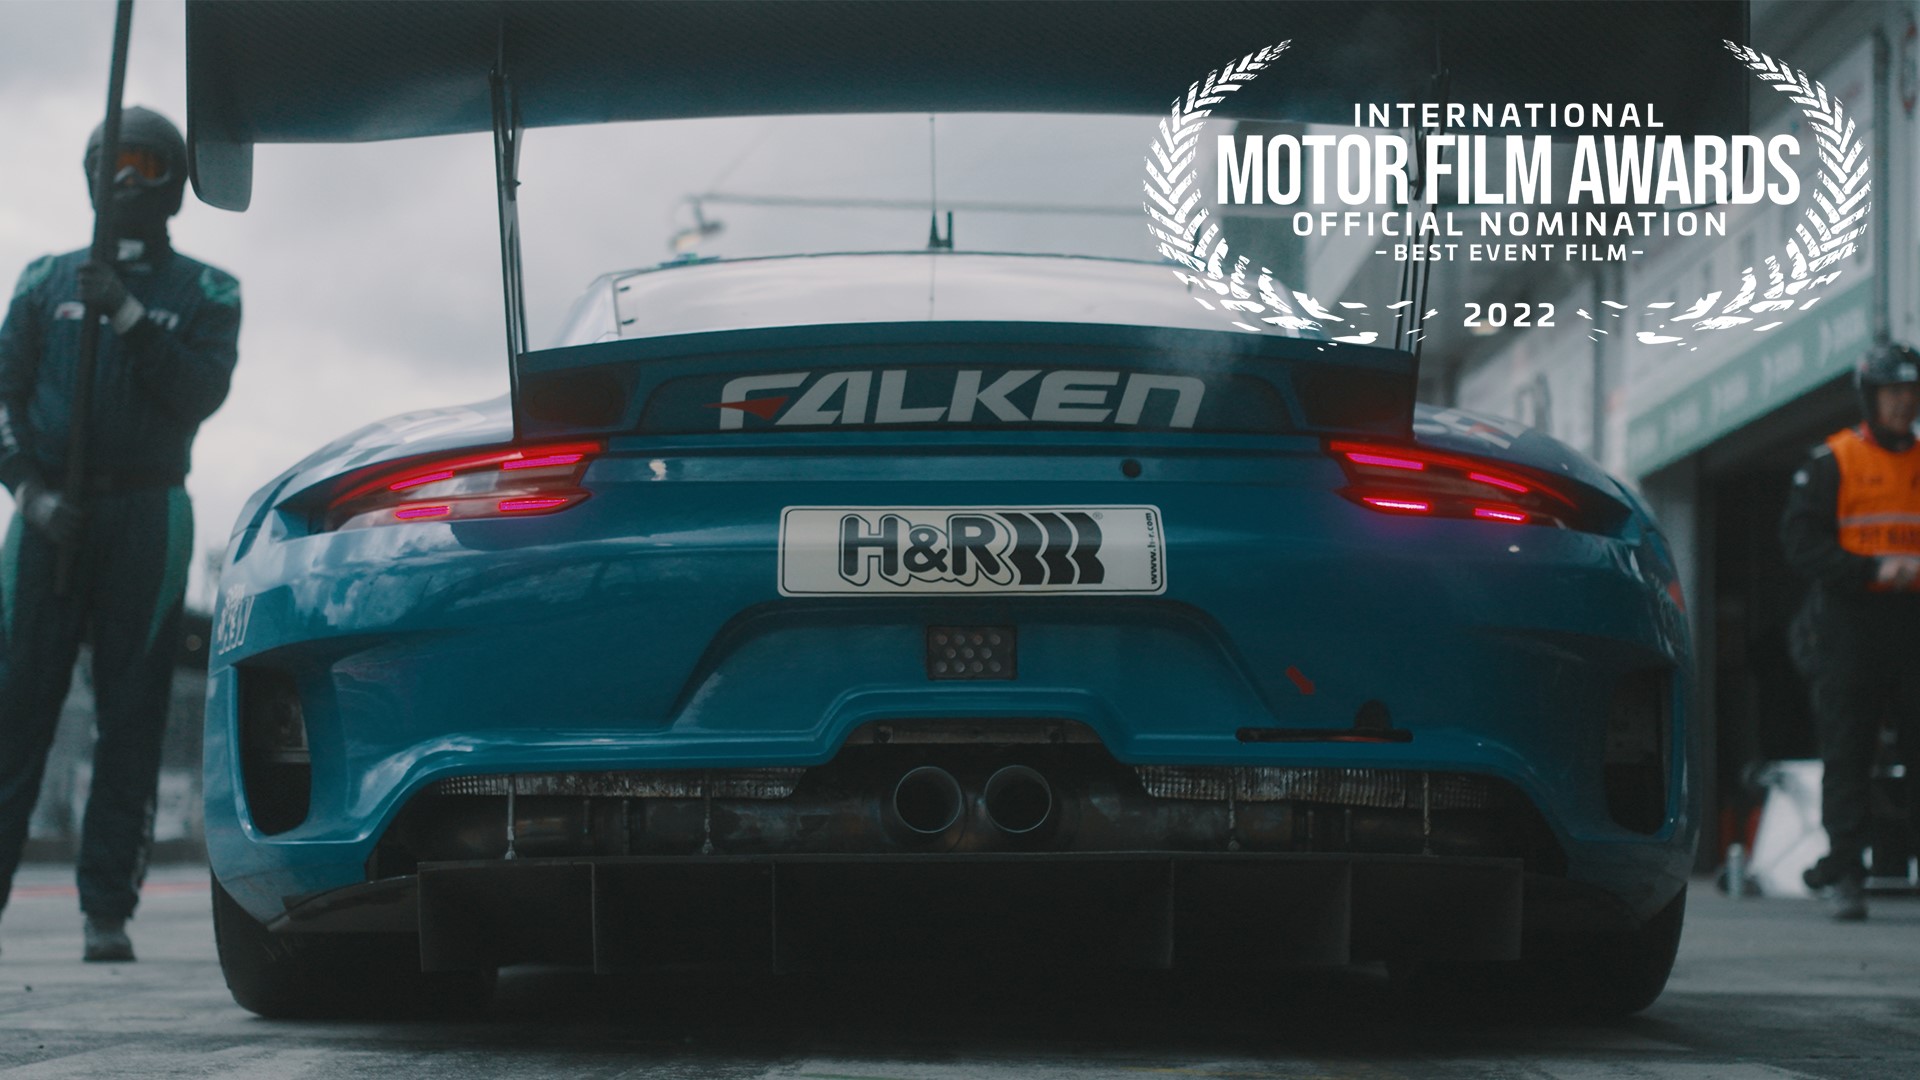 Falken Tyres nominated for International Motor Film Award